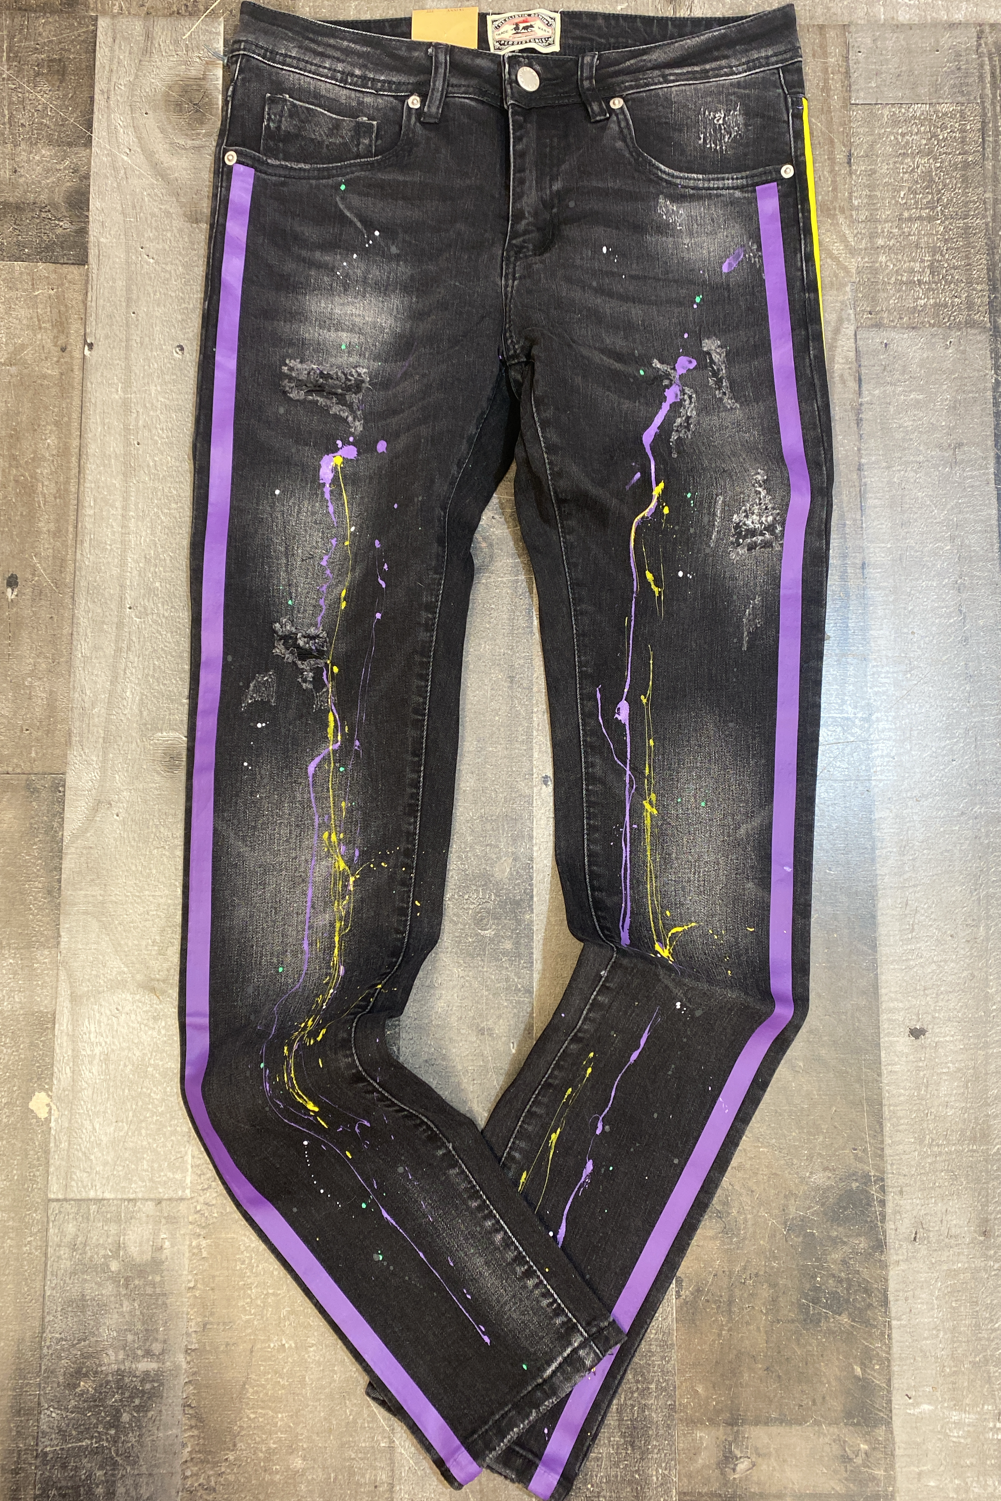 
                  
                    REELISTIKNYC- trenton black w purple/yellow stripes
                  
                